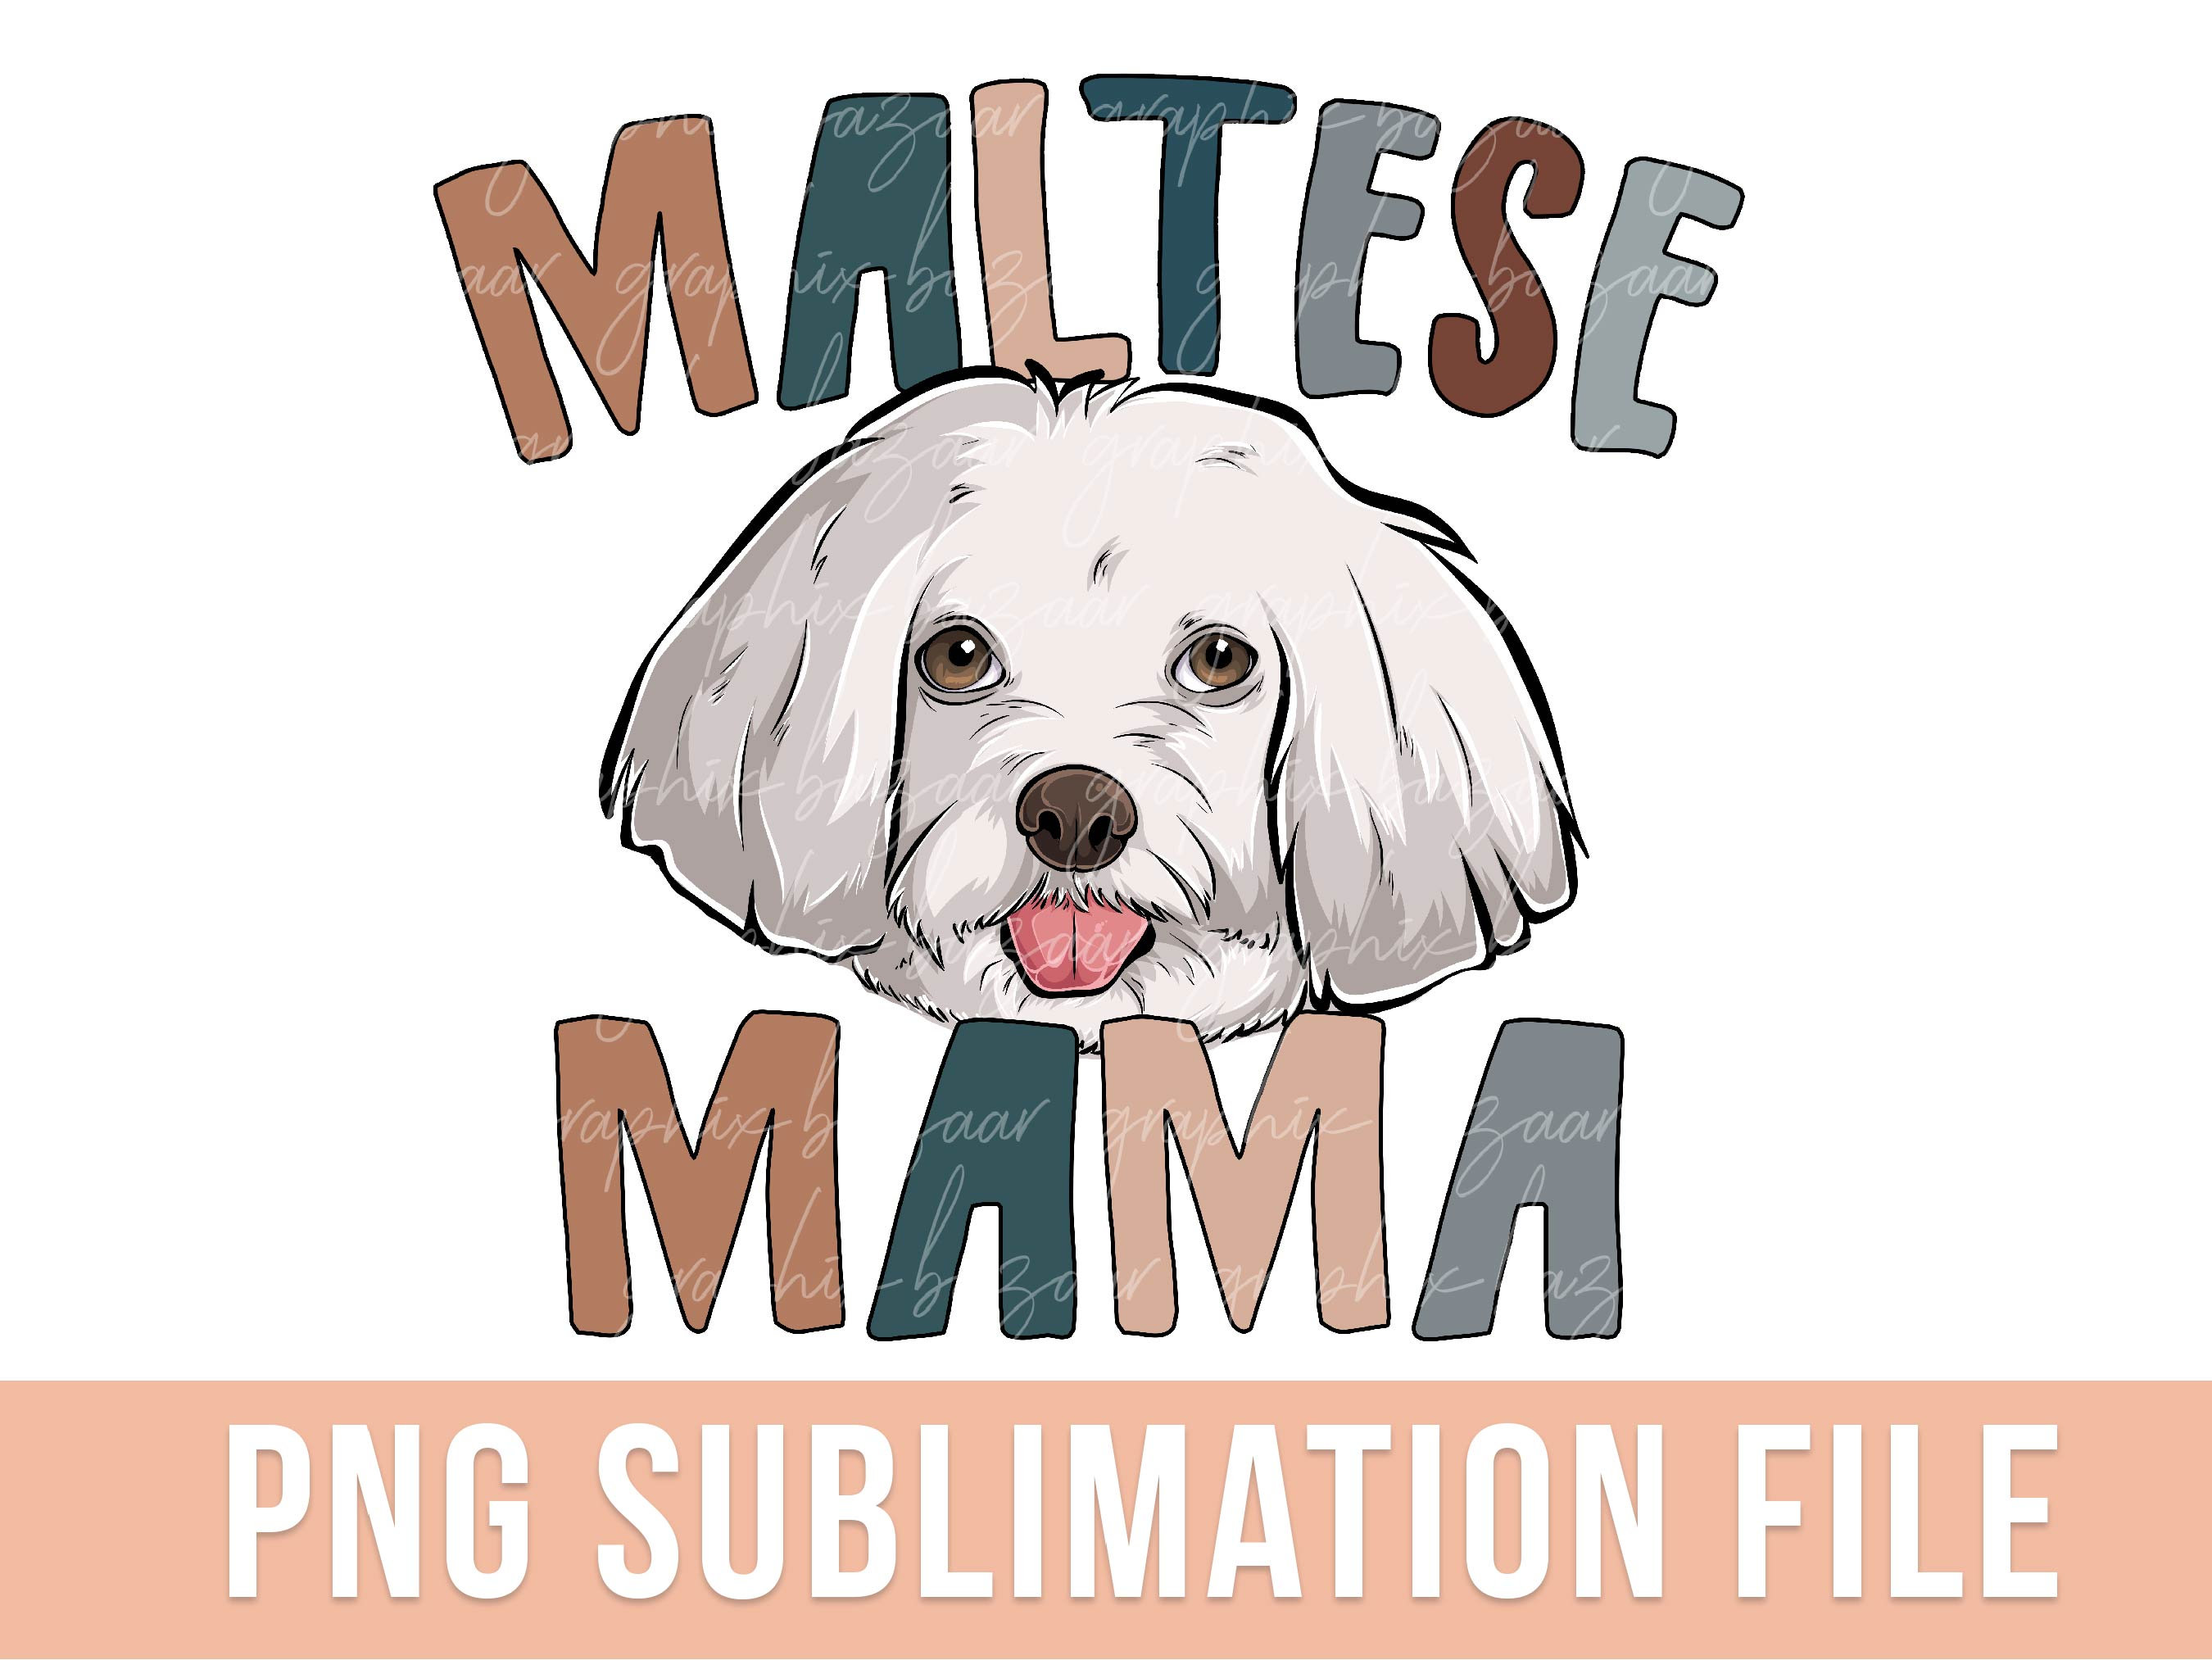 Maltese Mom Dog Mom Mothers Day Card, Maltese, Dog Mom Card, Happy